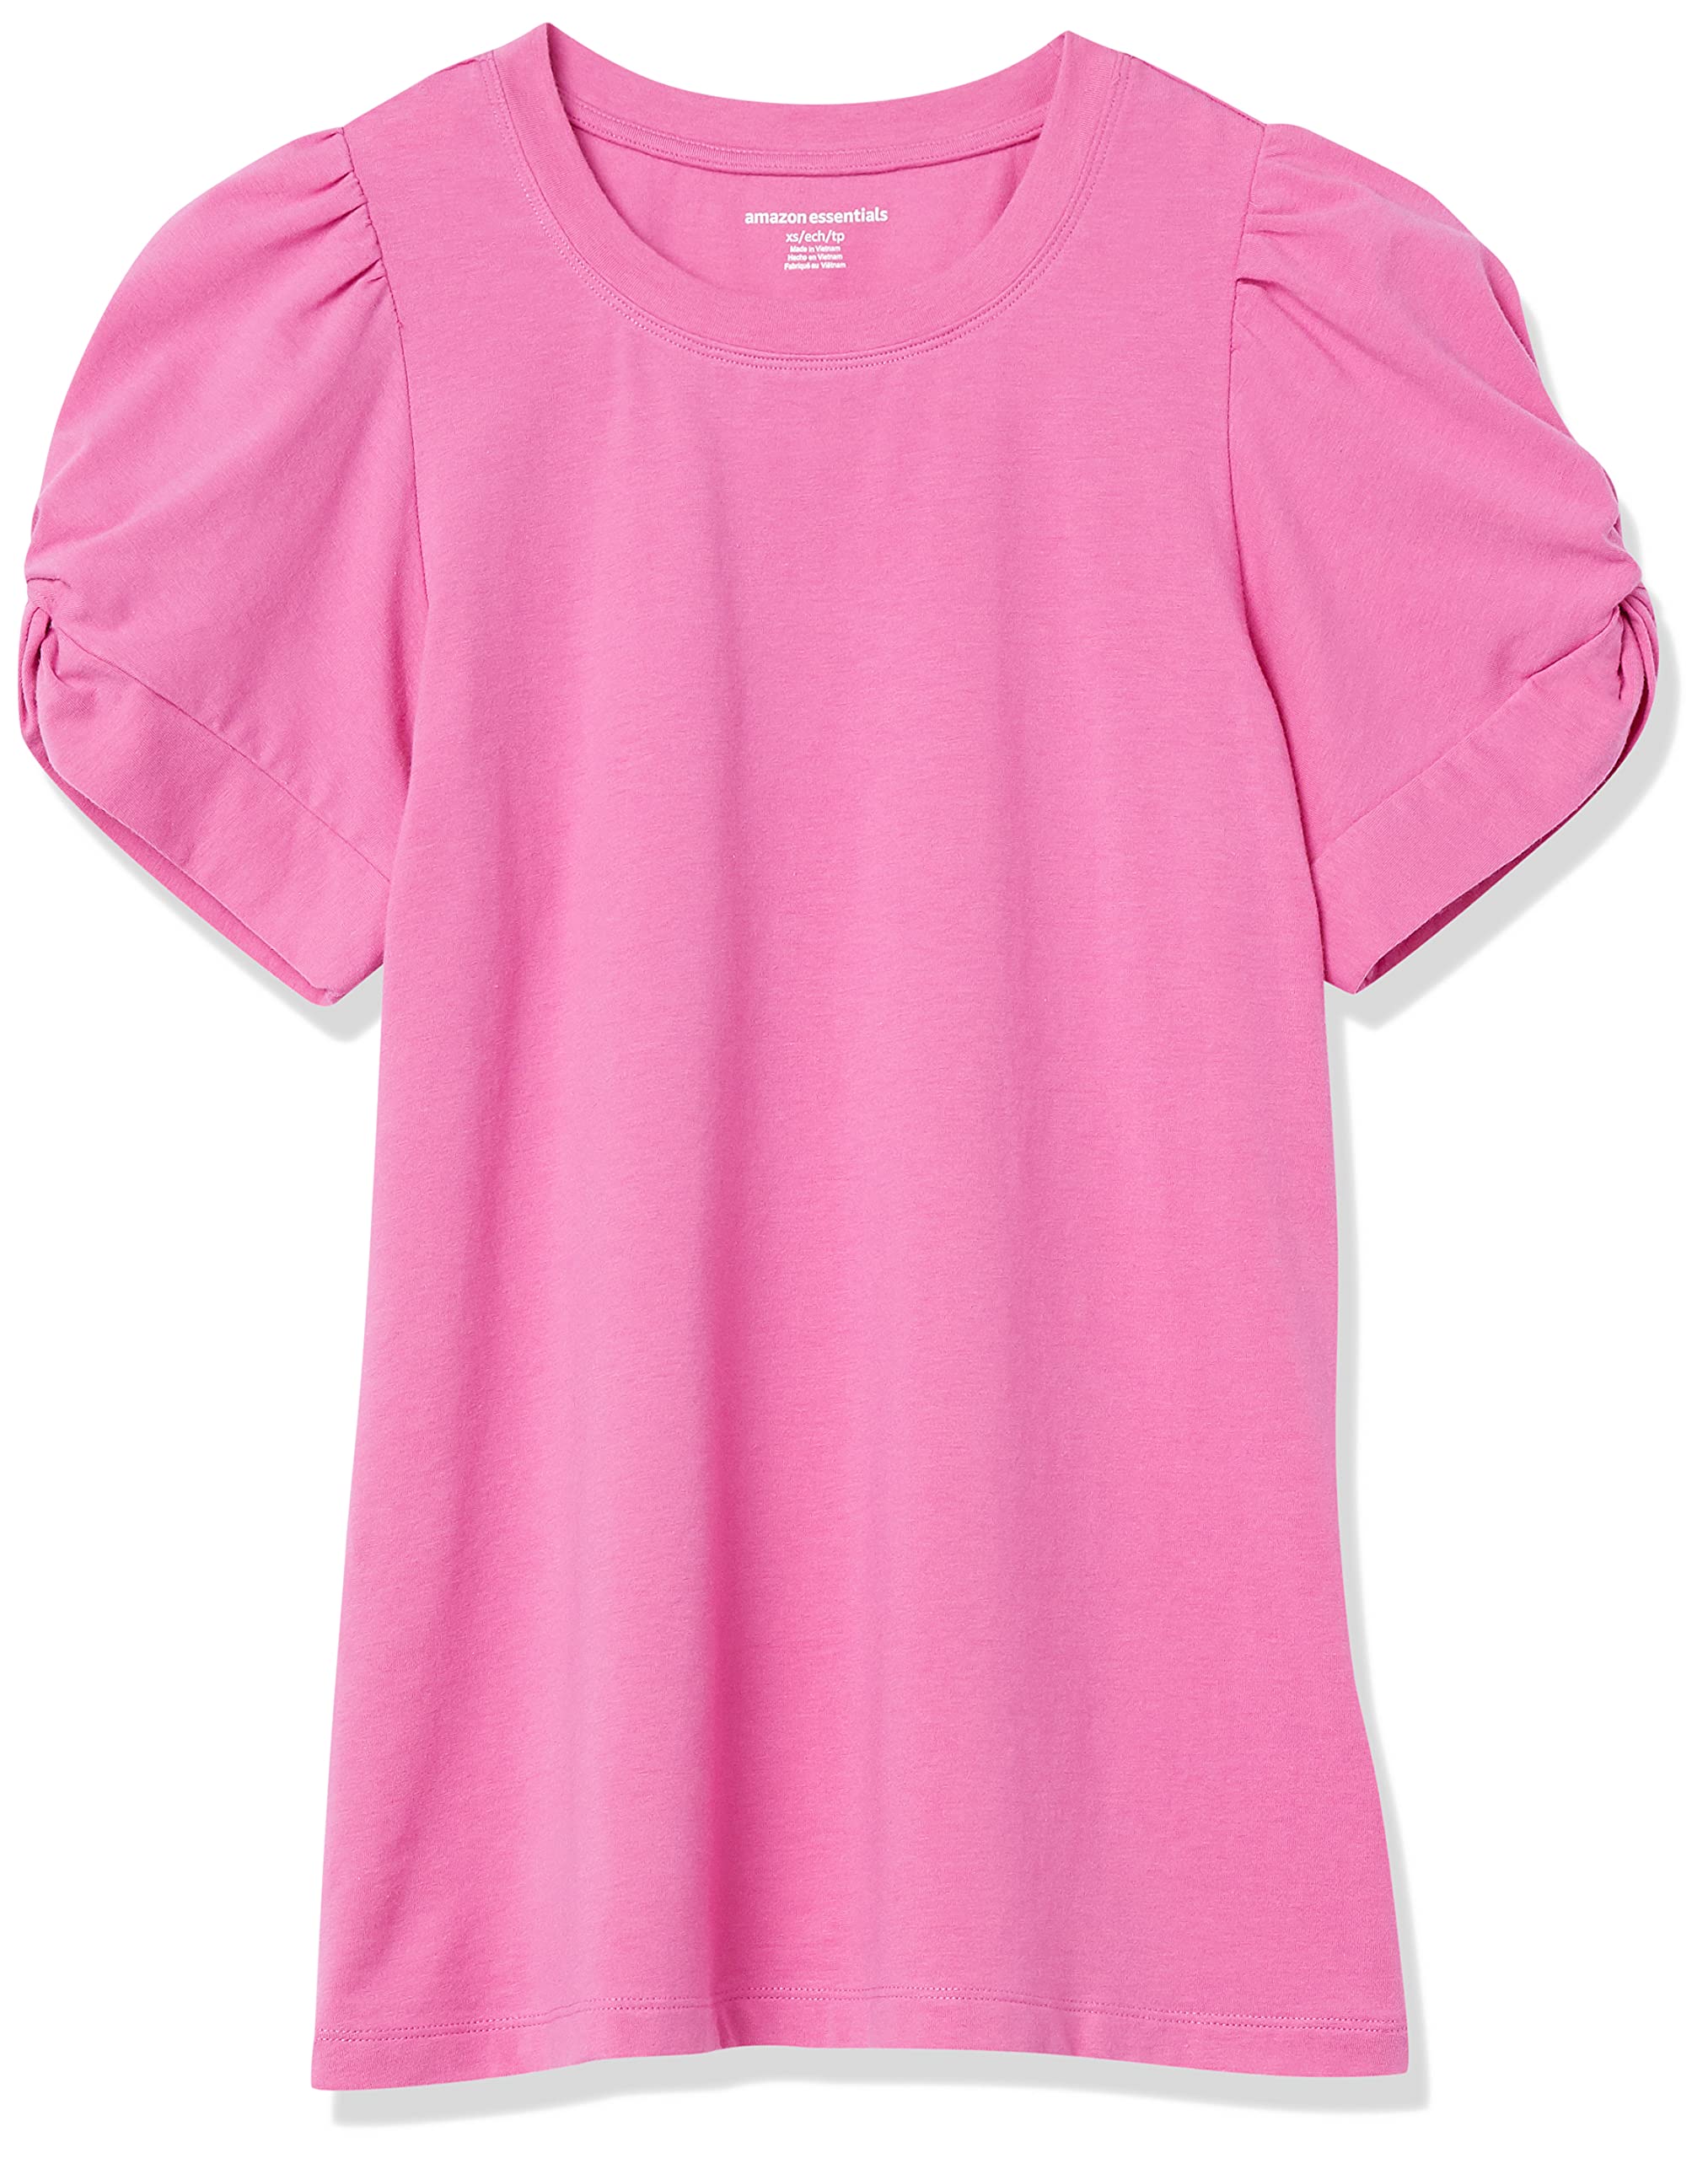 Amazon Essentials Women's Classic-Fit Twist Sleeve Crewneck T-Shirt